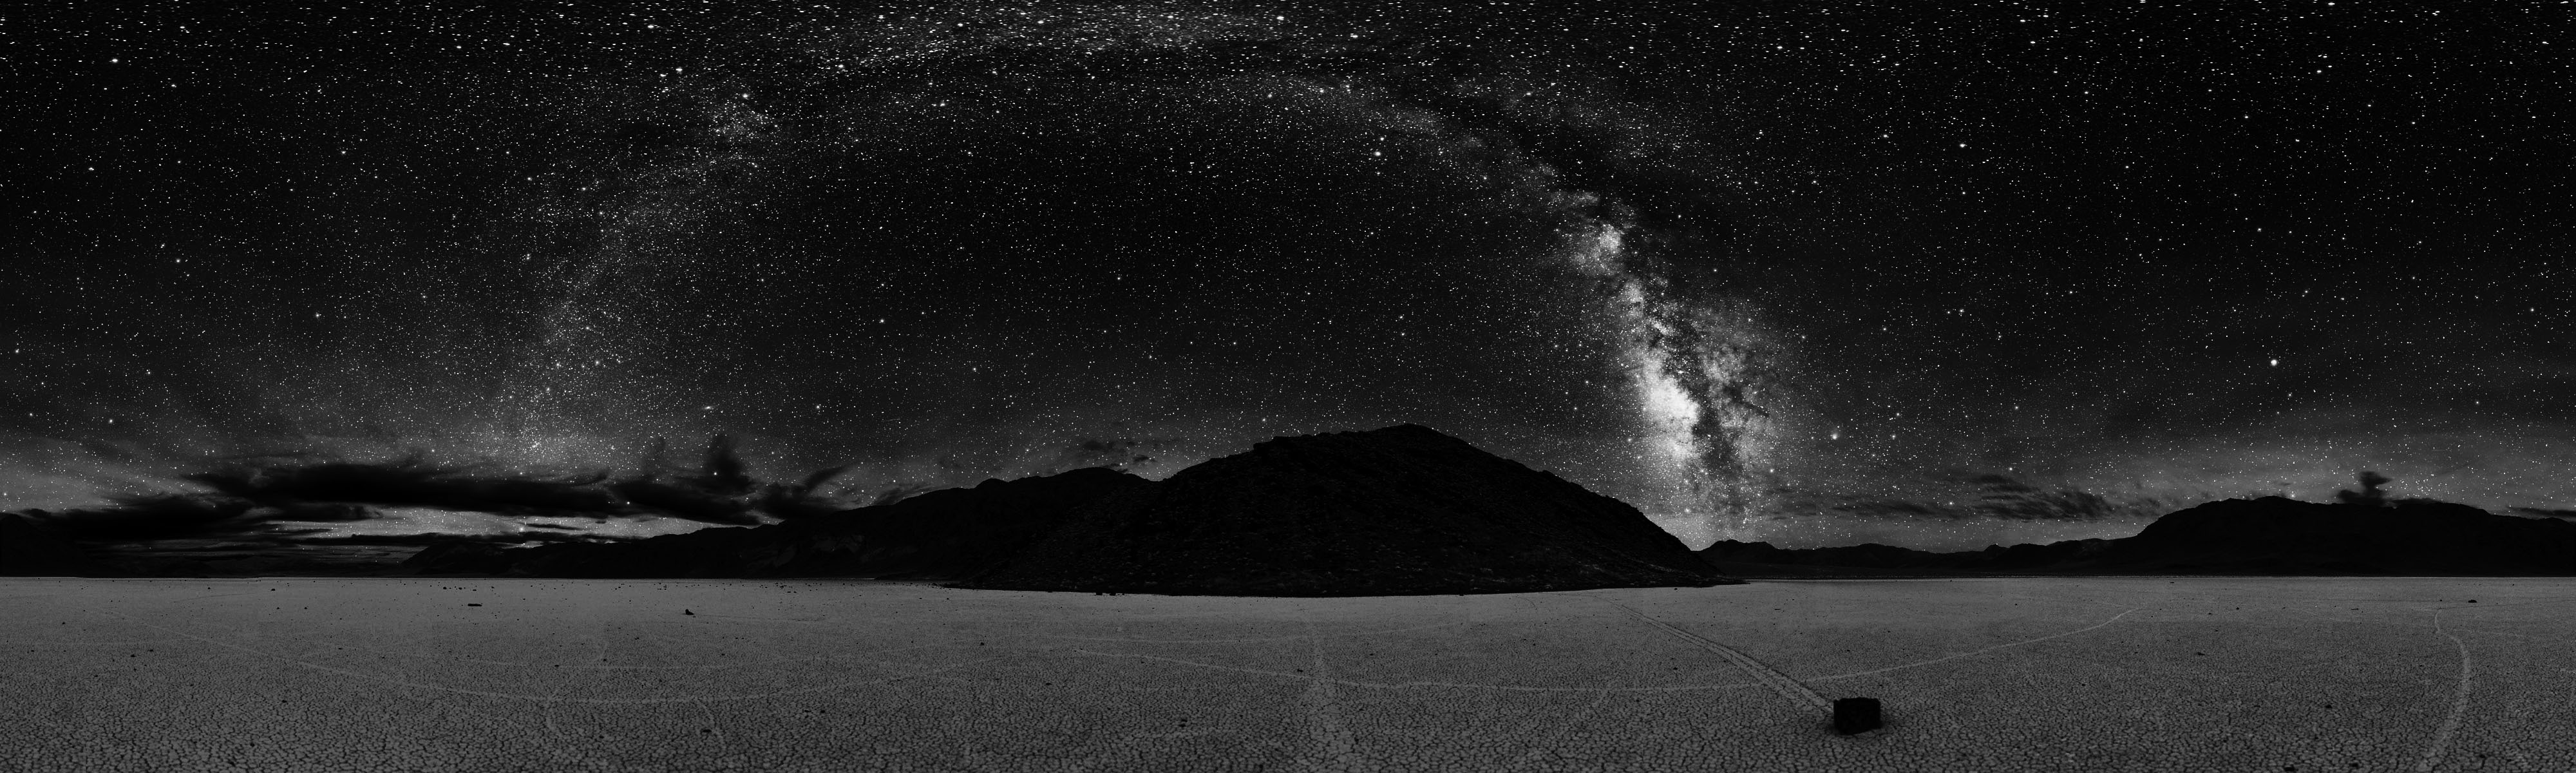 Milky Way Death Valley Black White Nightshot Widescreen Wallpaper